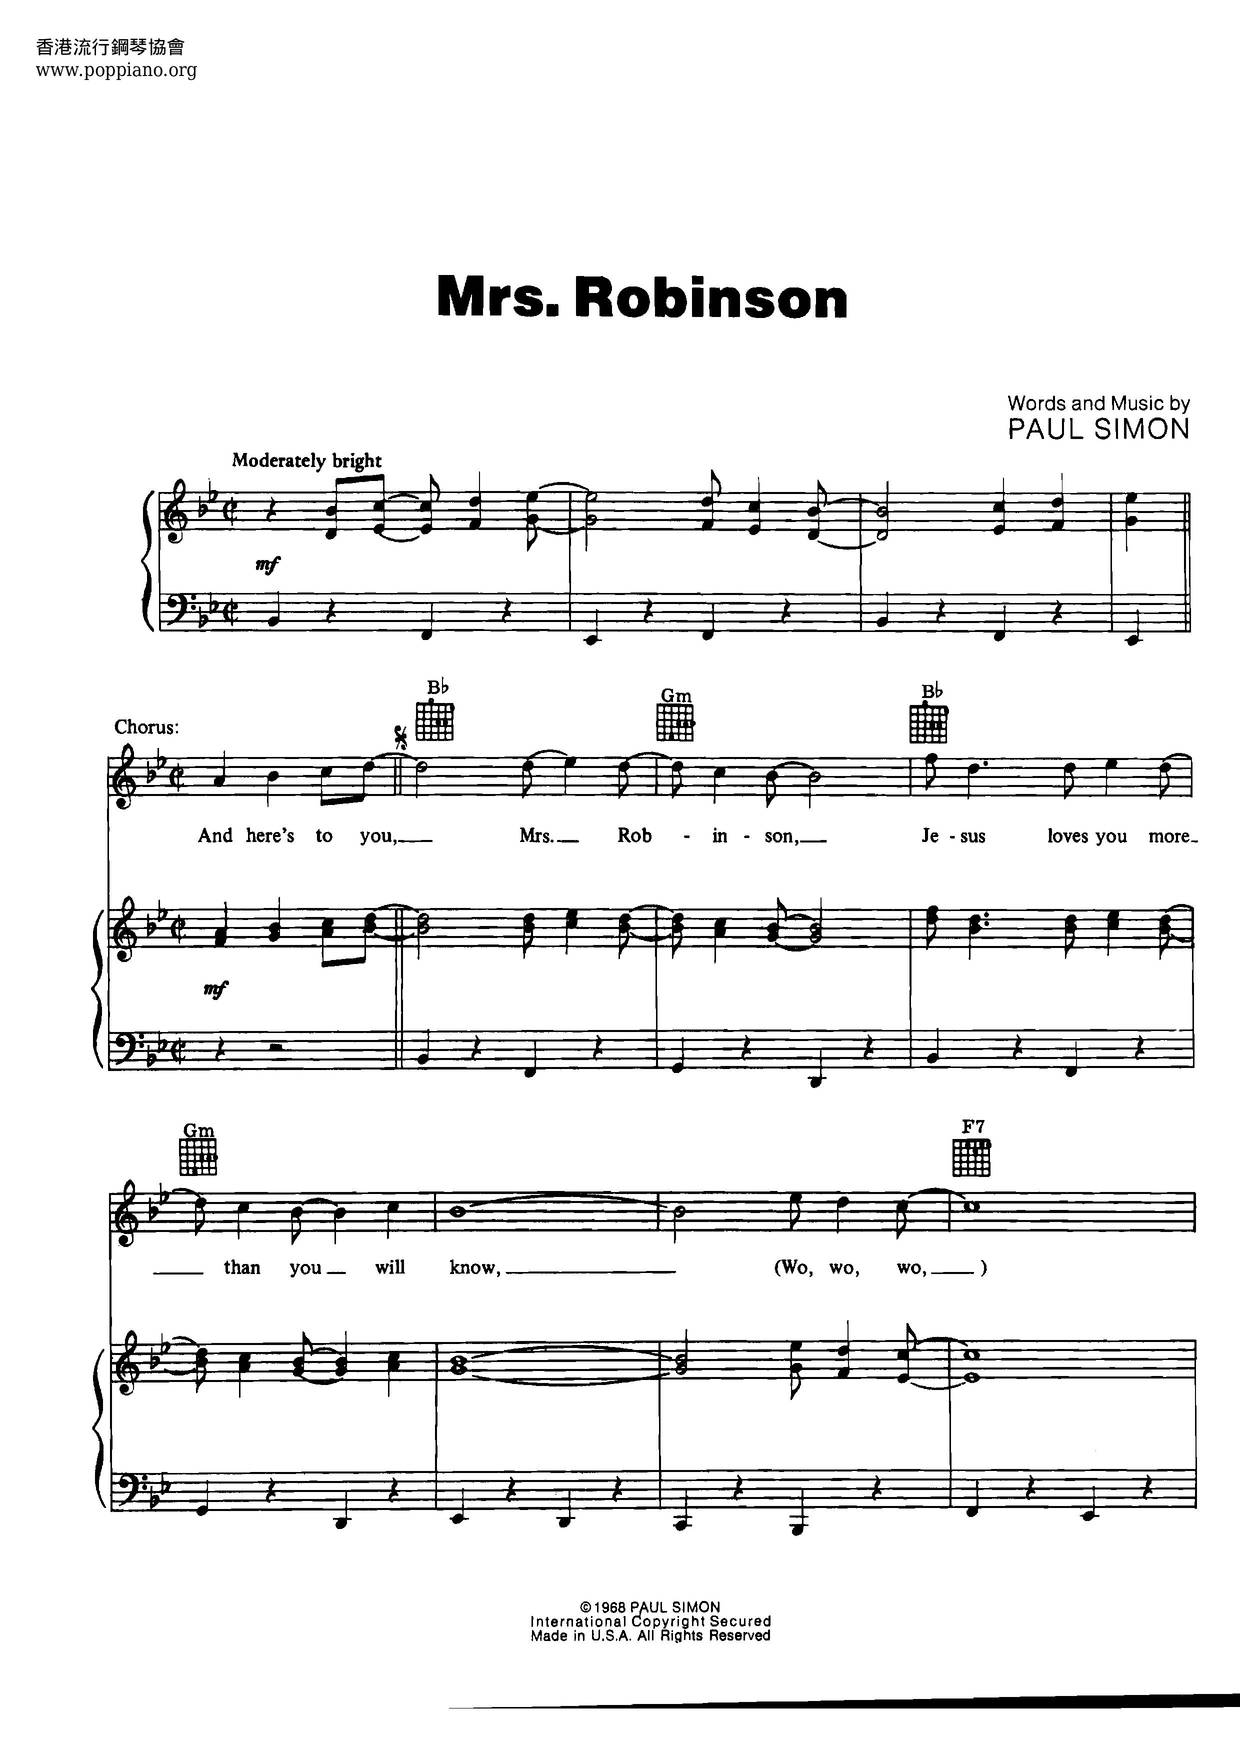 Mrs. Robinson - From The Graduate Soundtrack Score